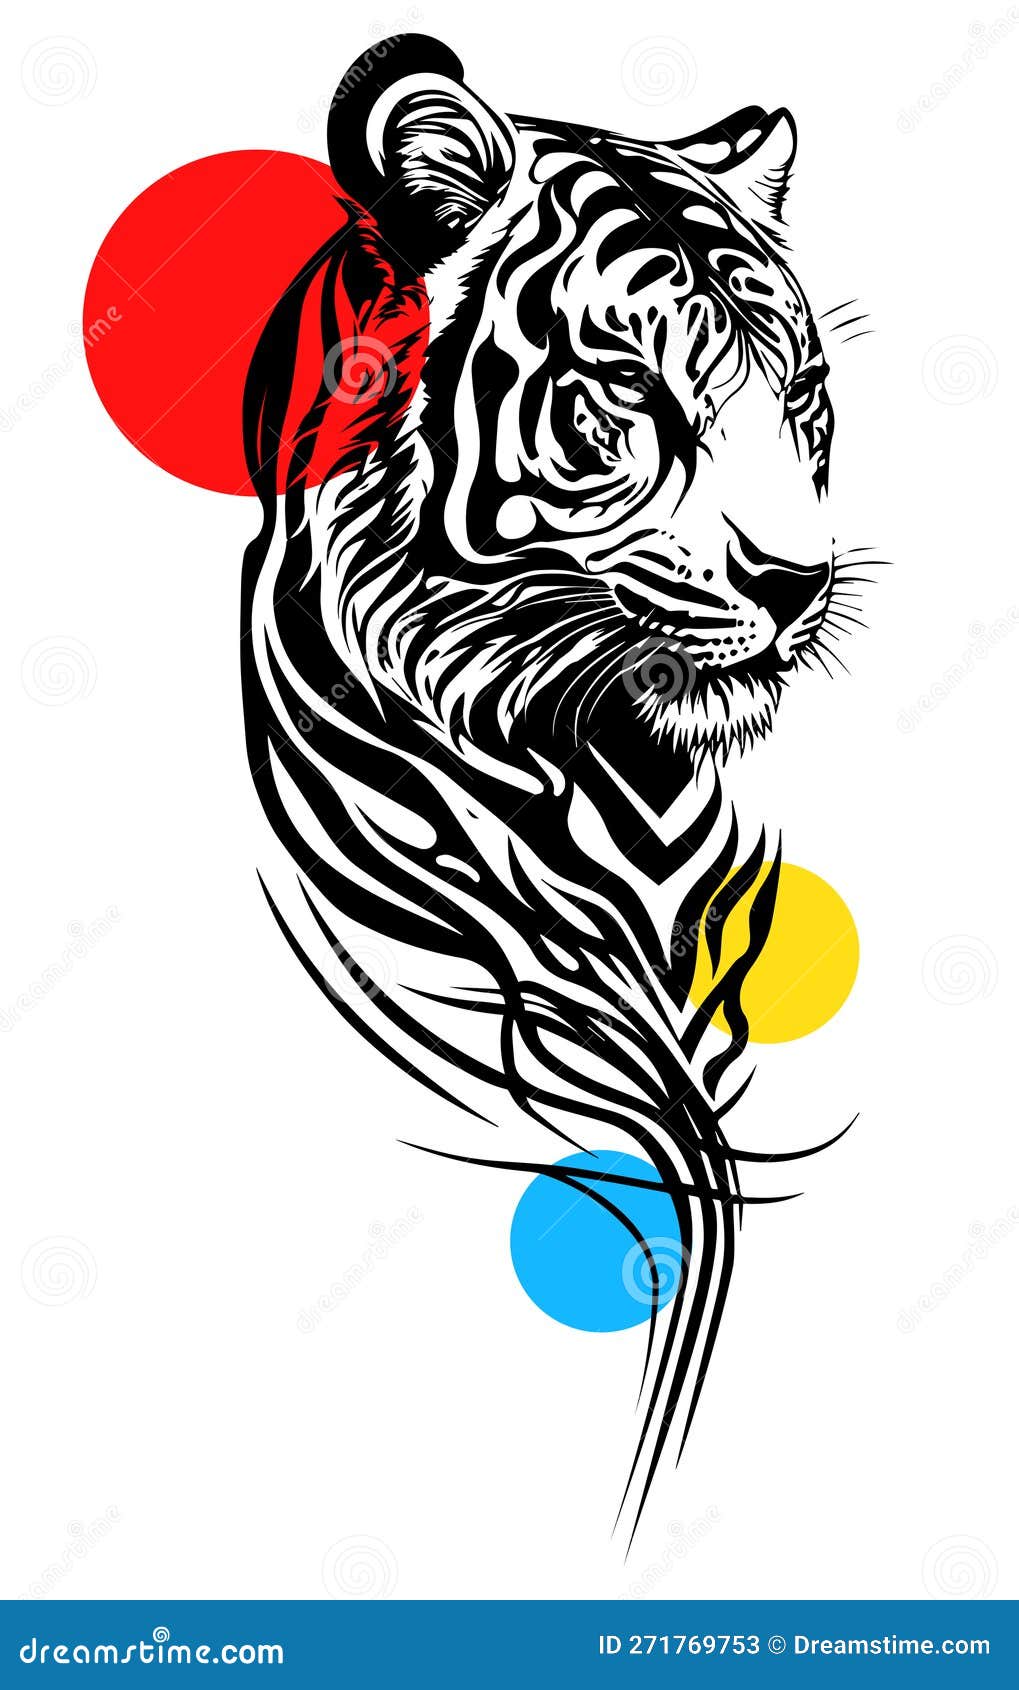 260+ Beautiful Tiger Tattoo Design Cartoons Stock Illustrations,  Royalty-Free Vector Graphics & Clip Art - iStock